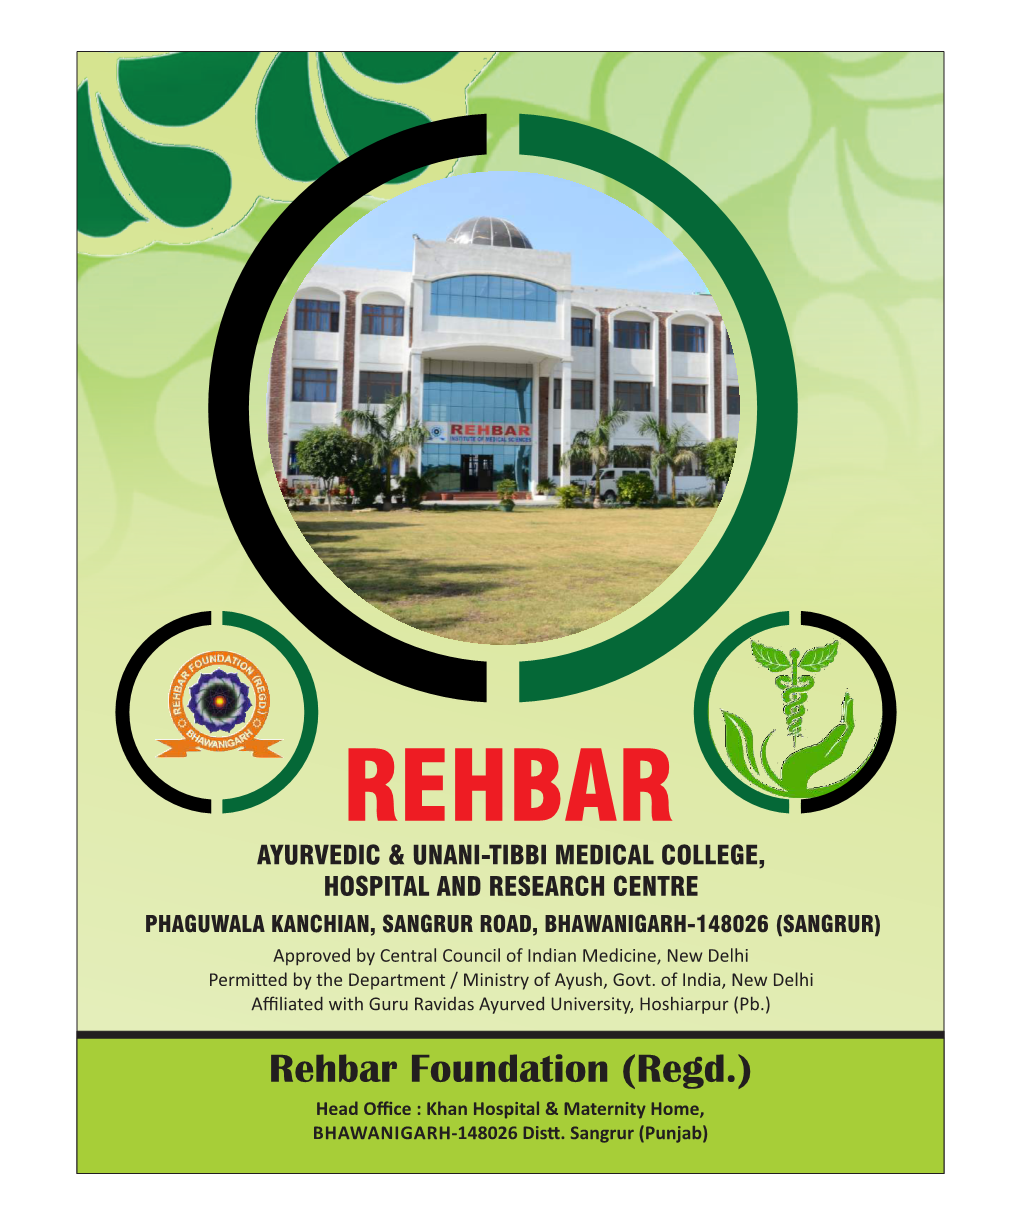 Regd.) Head Oﬃce : Khan Hospital & Maternity Home, BHAWANIGARH-148026 Dis